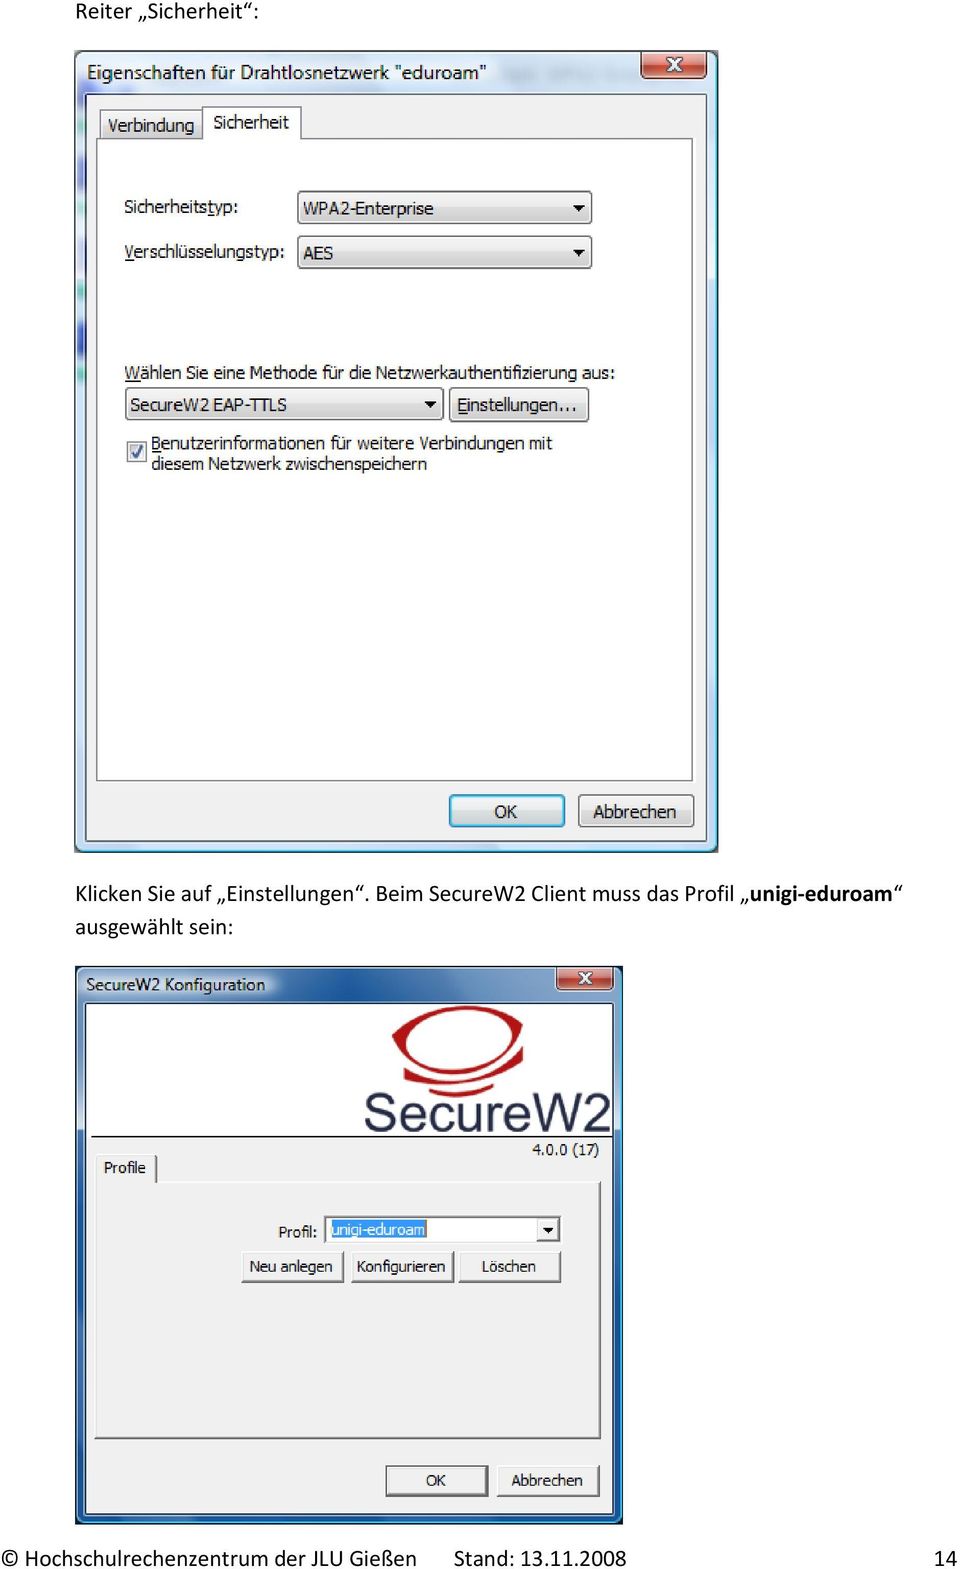 Beim SecureW2 Client muss das Profil unigi